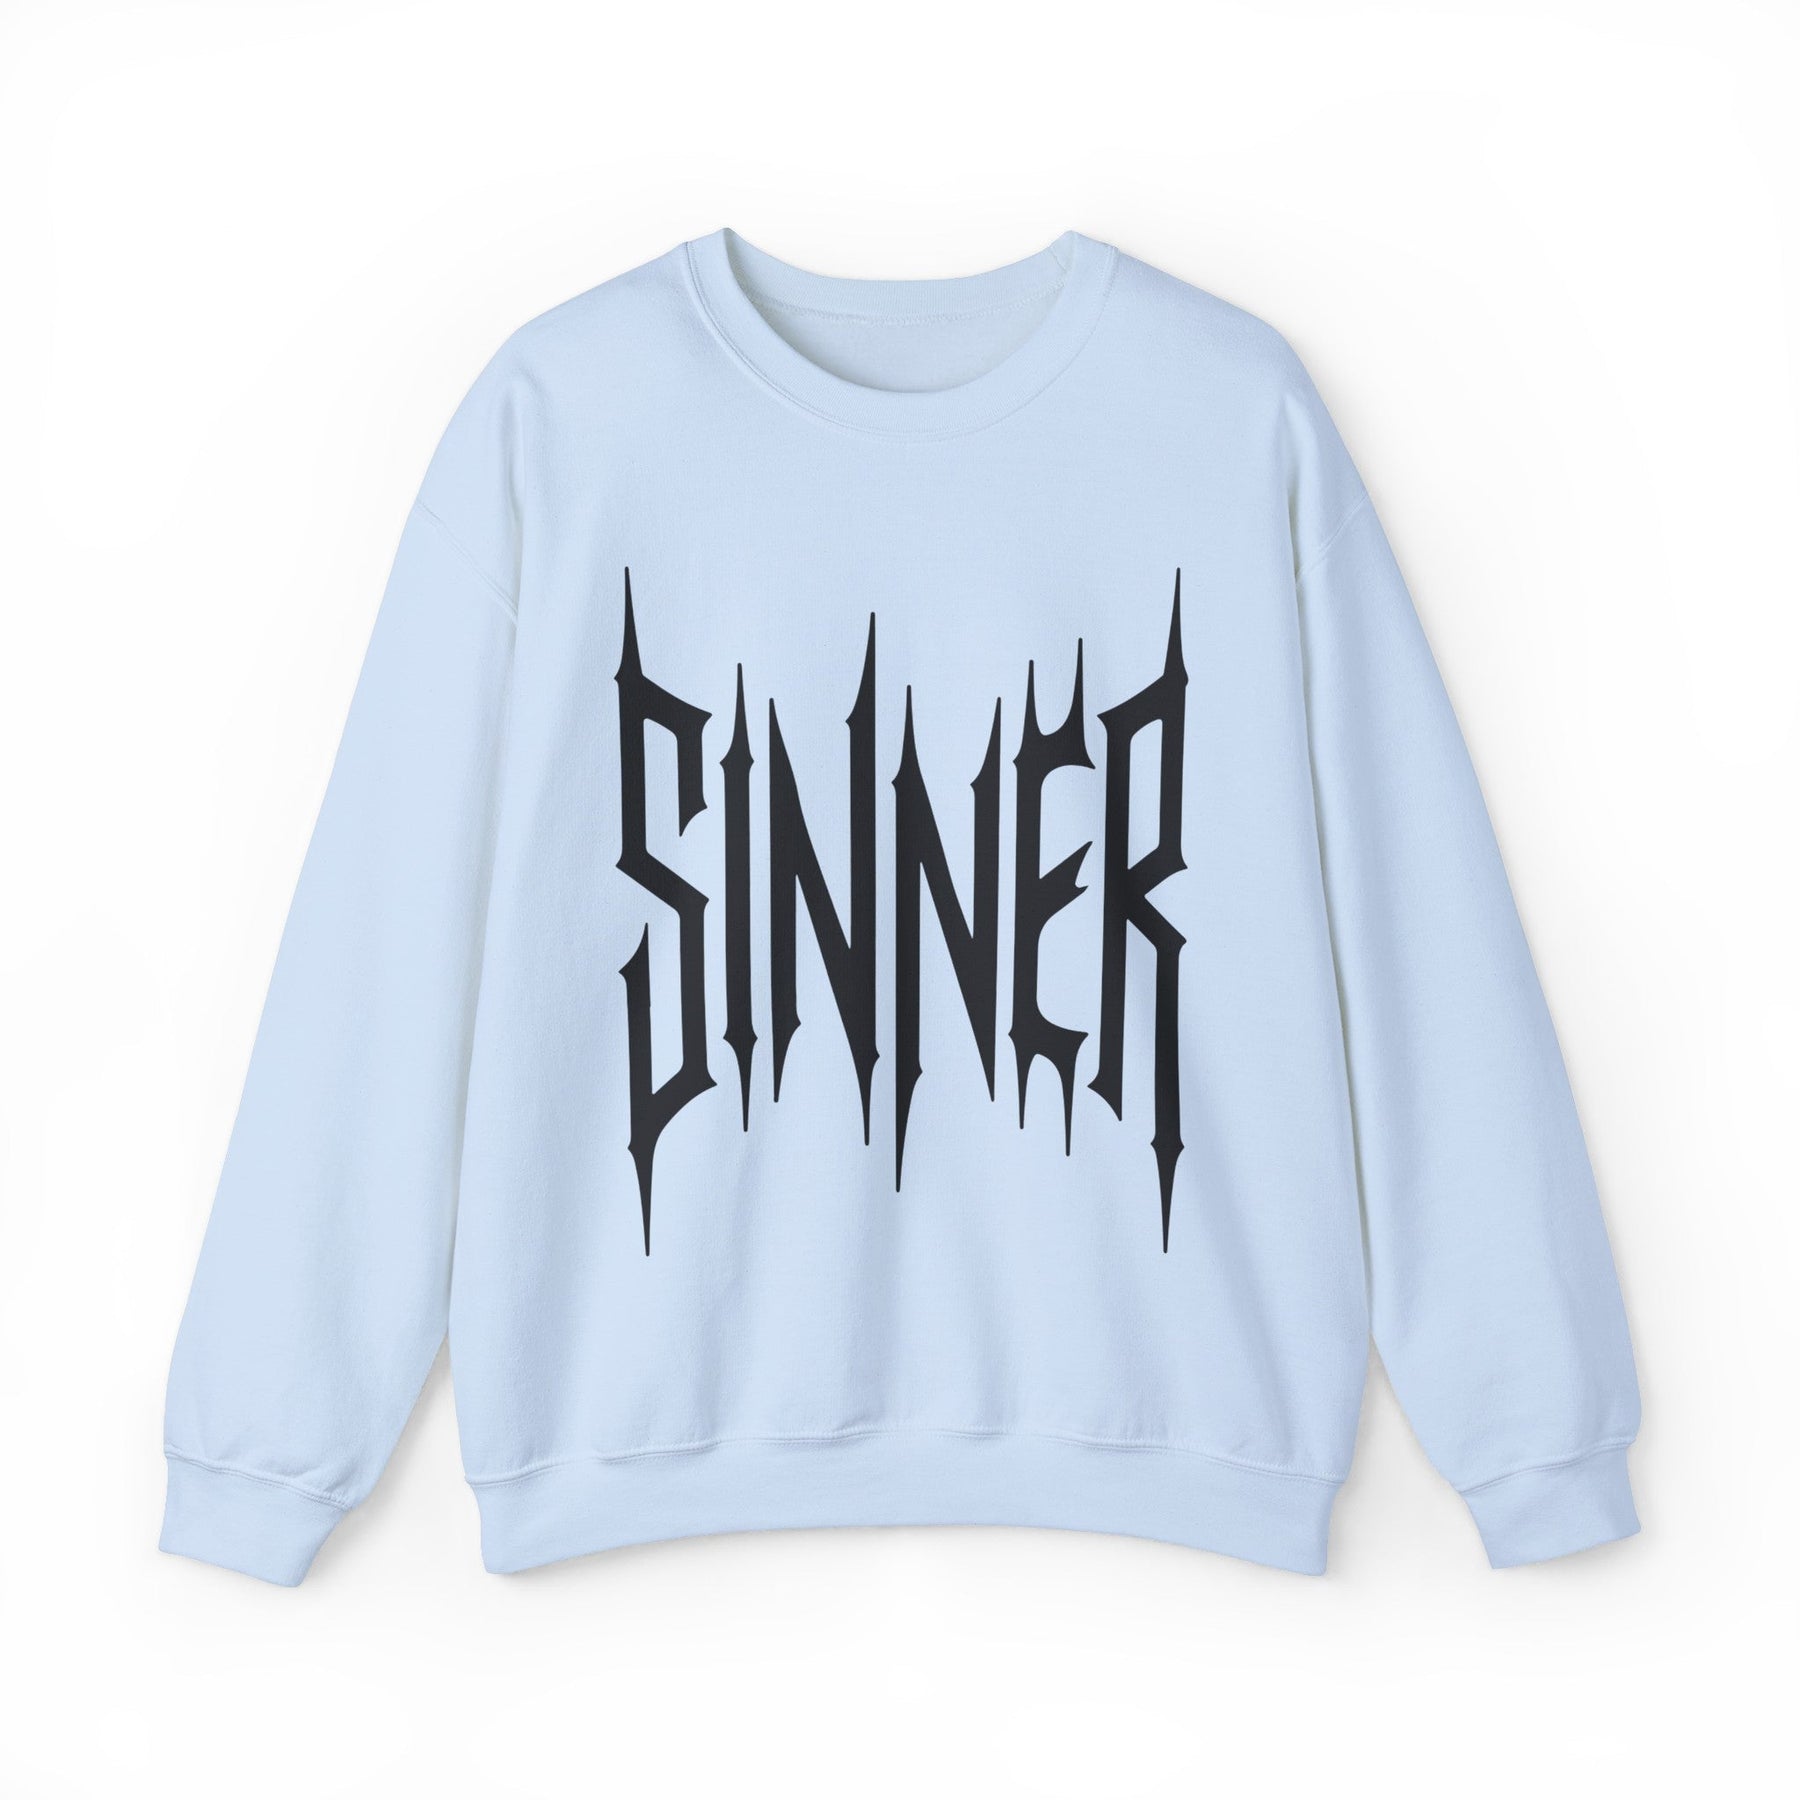 Sinner Unisex Sweatshirt - Goth Cloth Co.Sweatshirt32327301715442503419